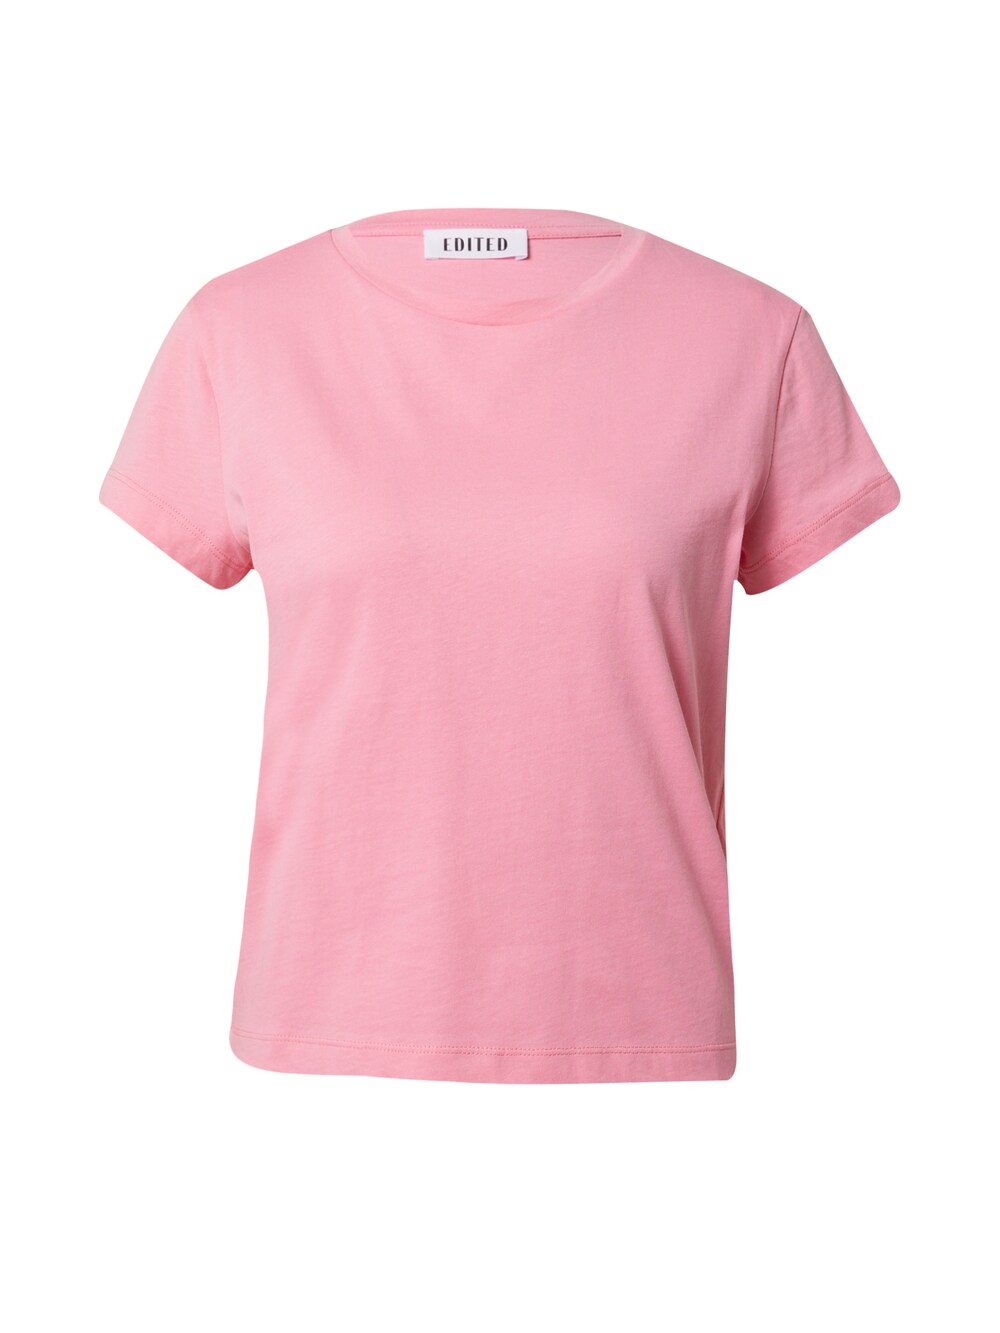 Рубашка EDITED Ester, розовый рубашка edited ester белый